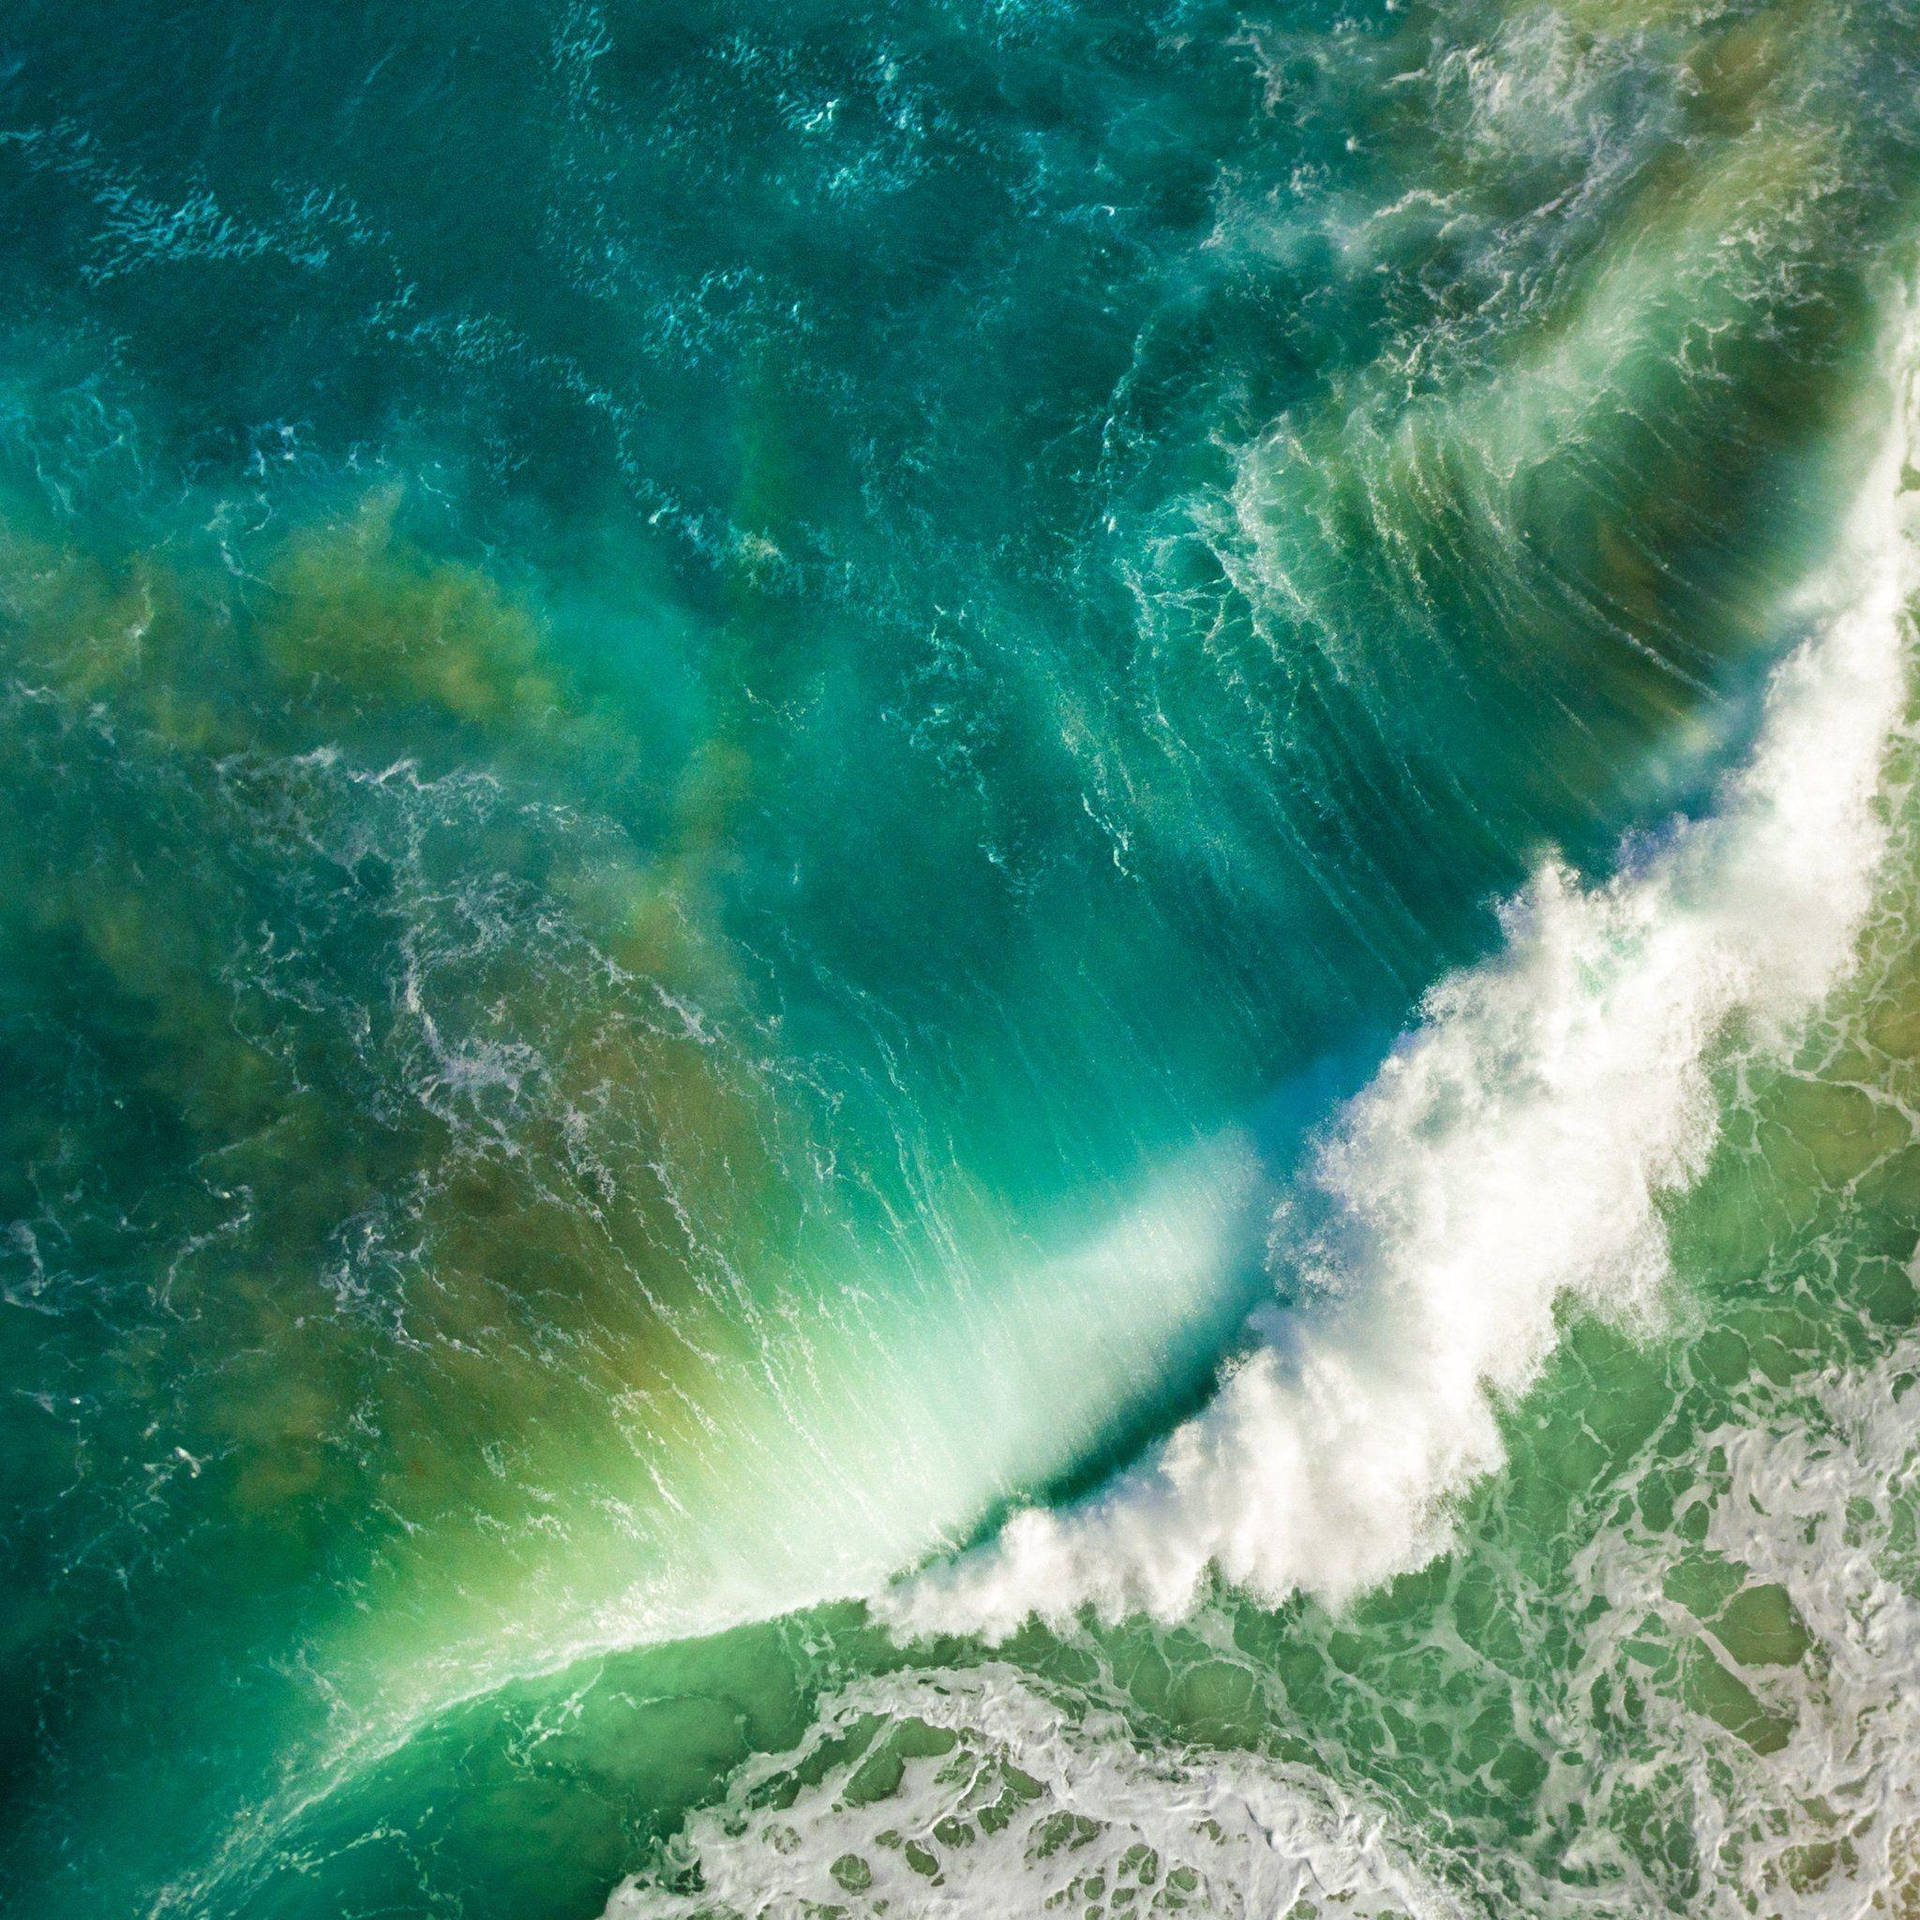 Ipad Pro Top View Of Waves Crashing